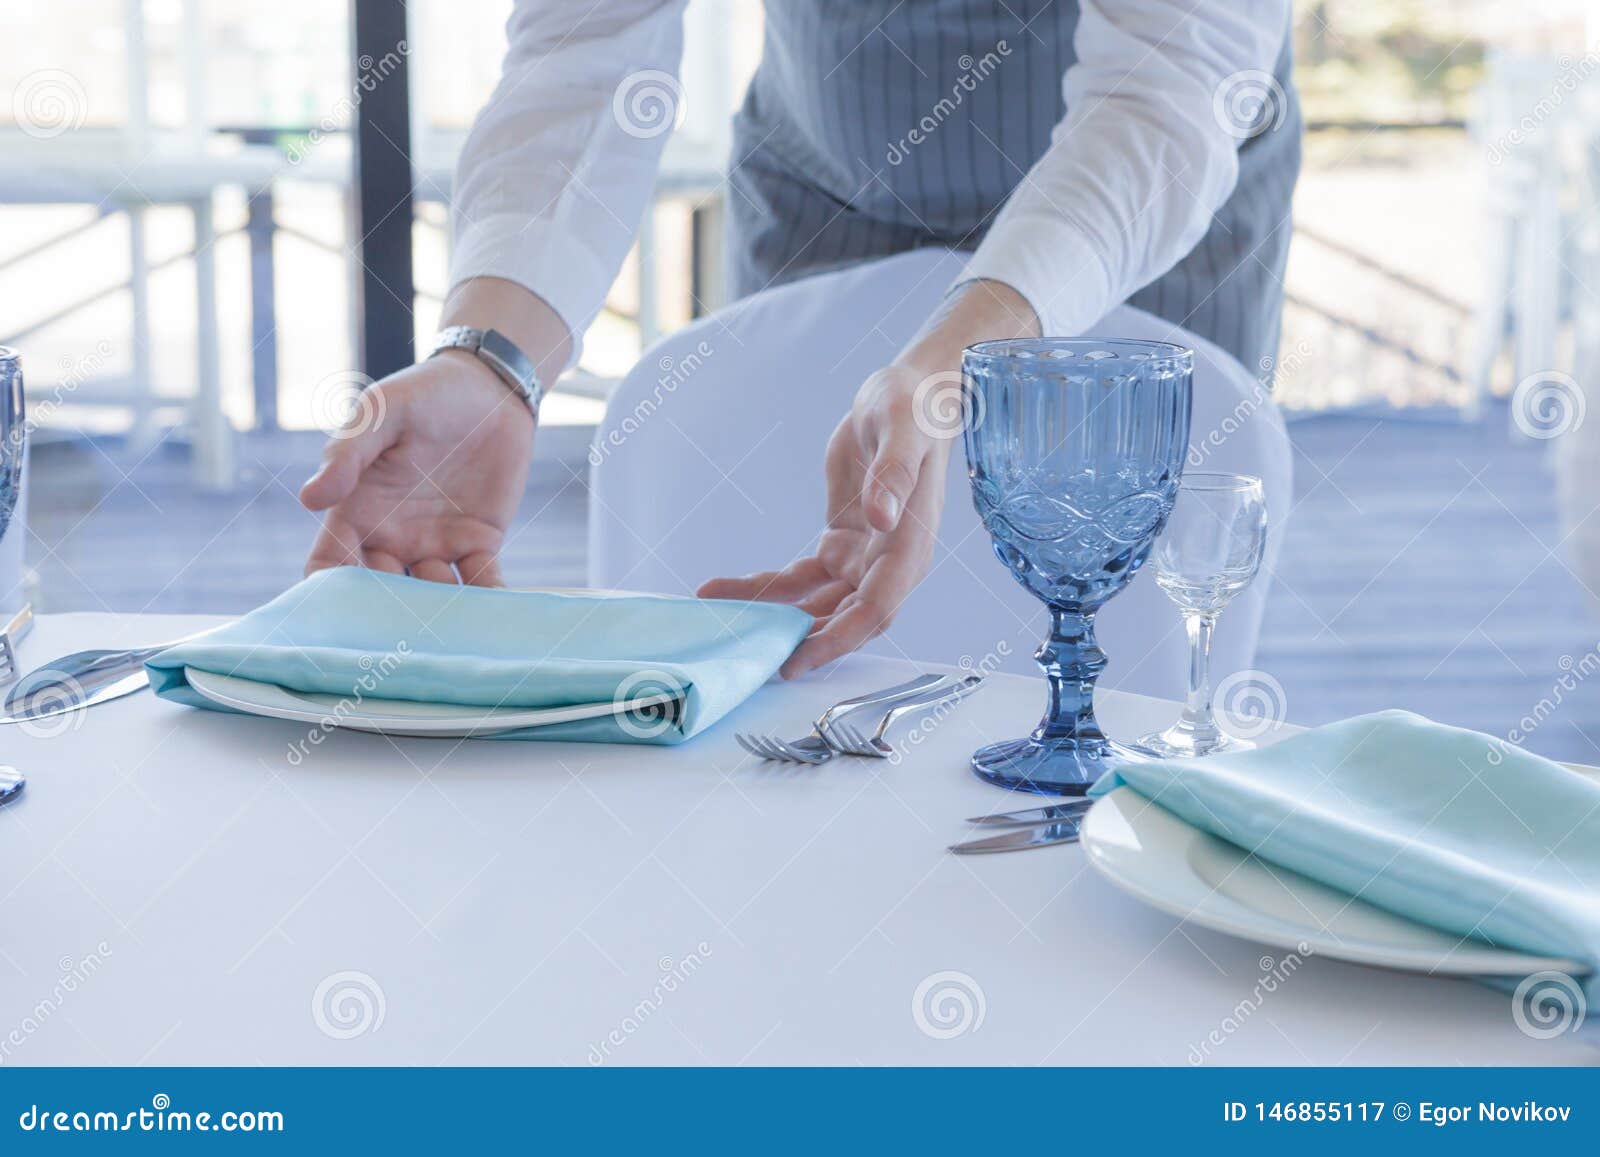 restaurant waiter serves a table for a wedding celebration